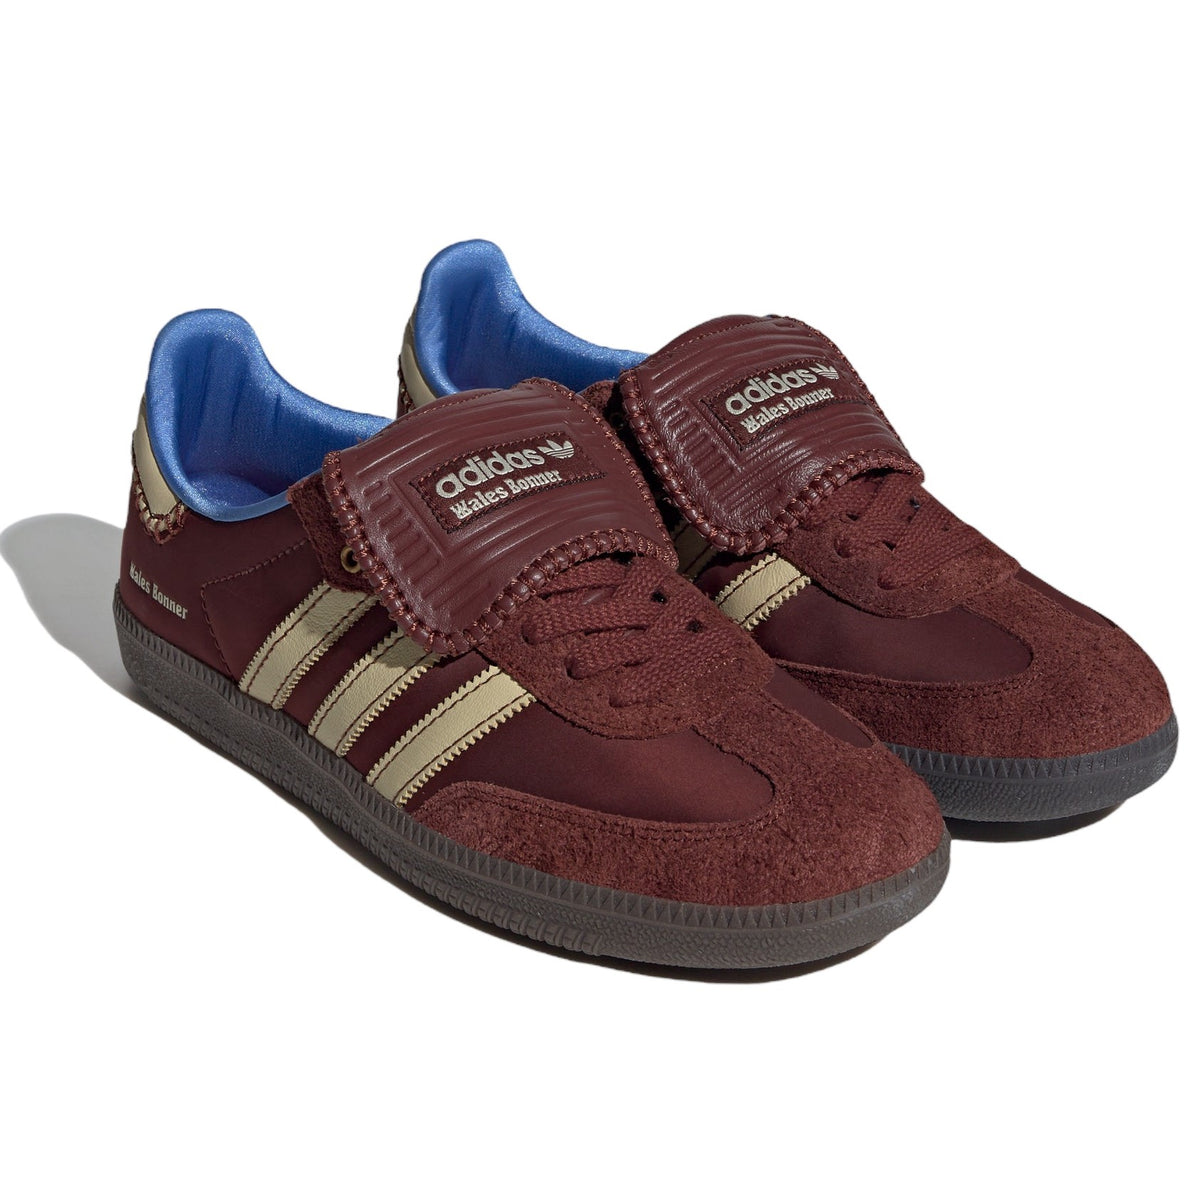 Adidas Originals x Wales Bonner Samba Nylon - Brown | In stock – WEAR43WAY